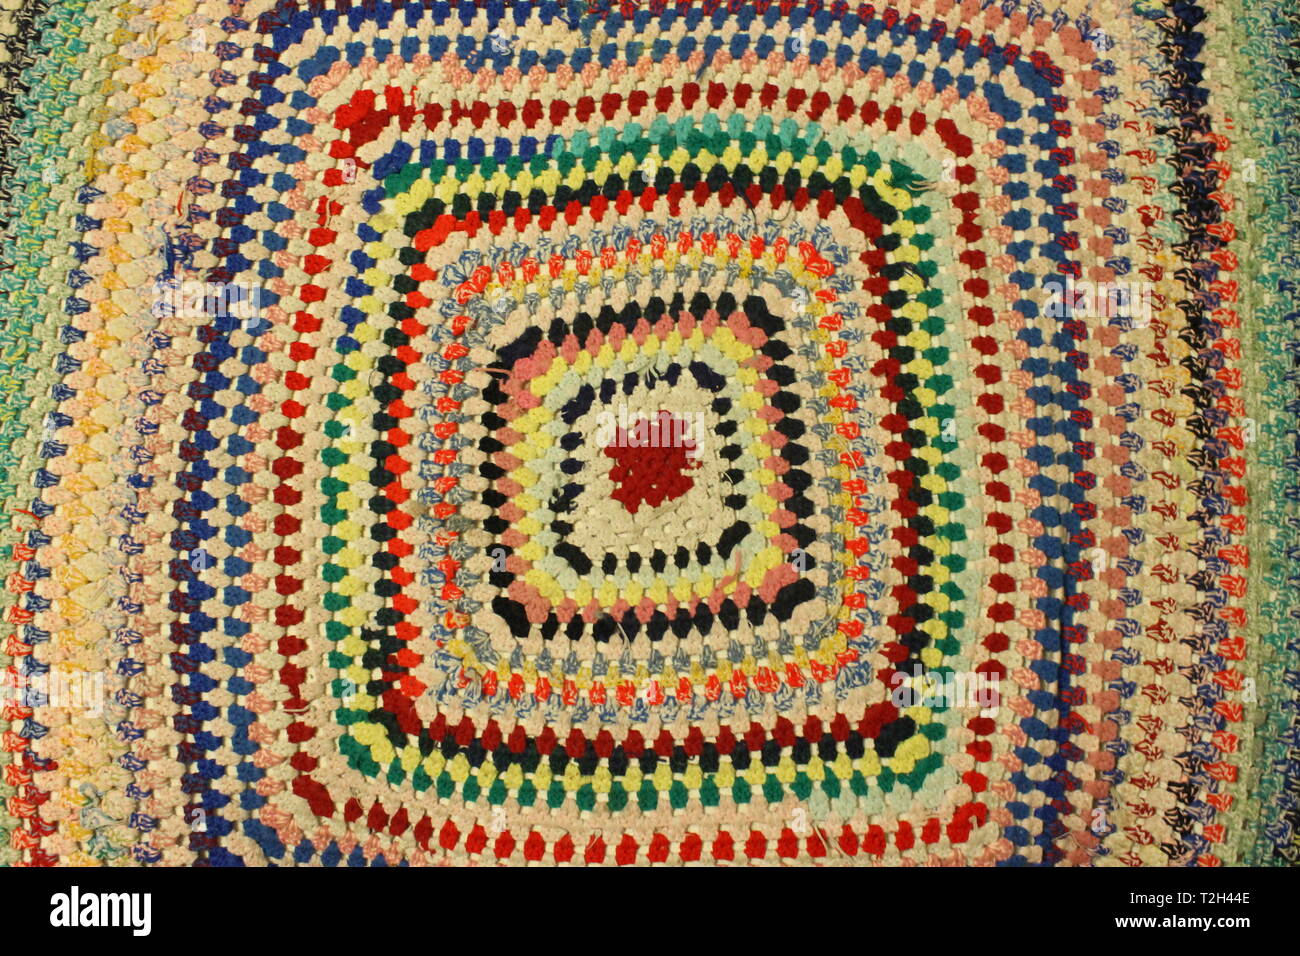 colourful granny crochet blanket Stock Photo